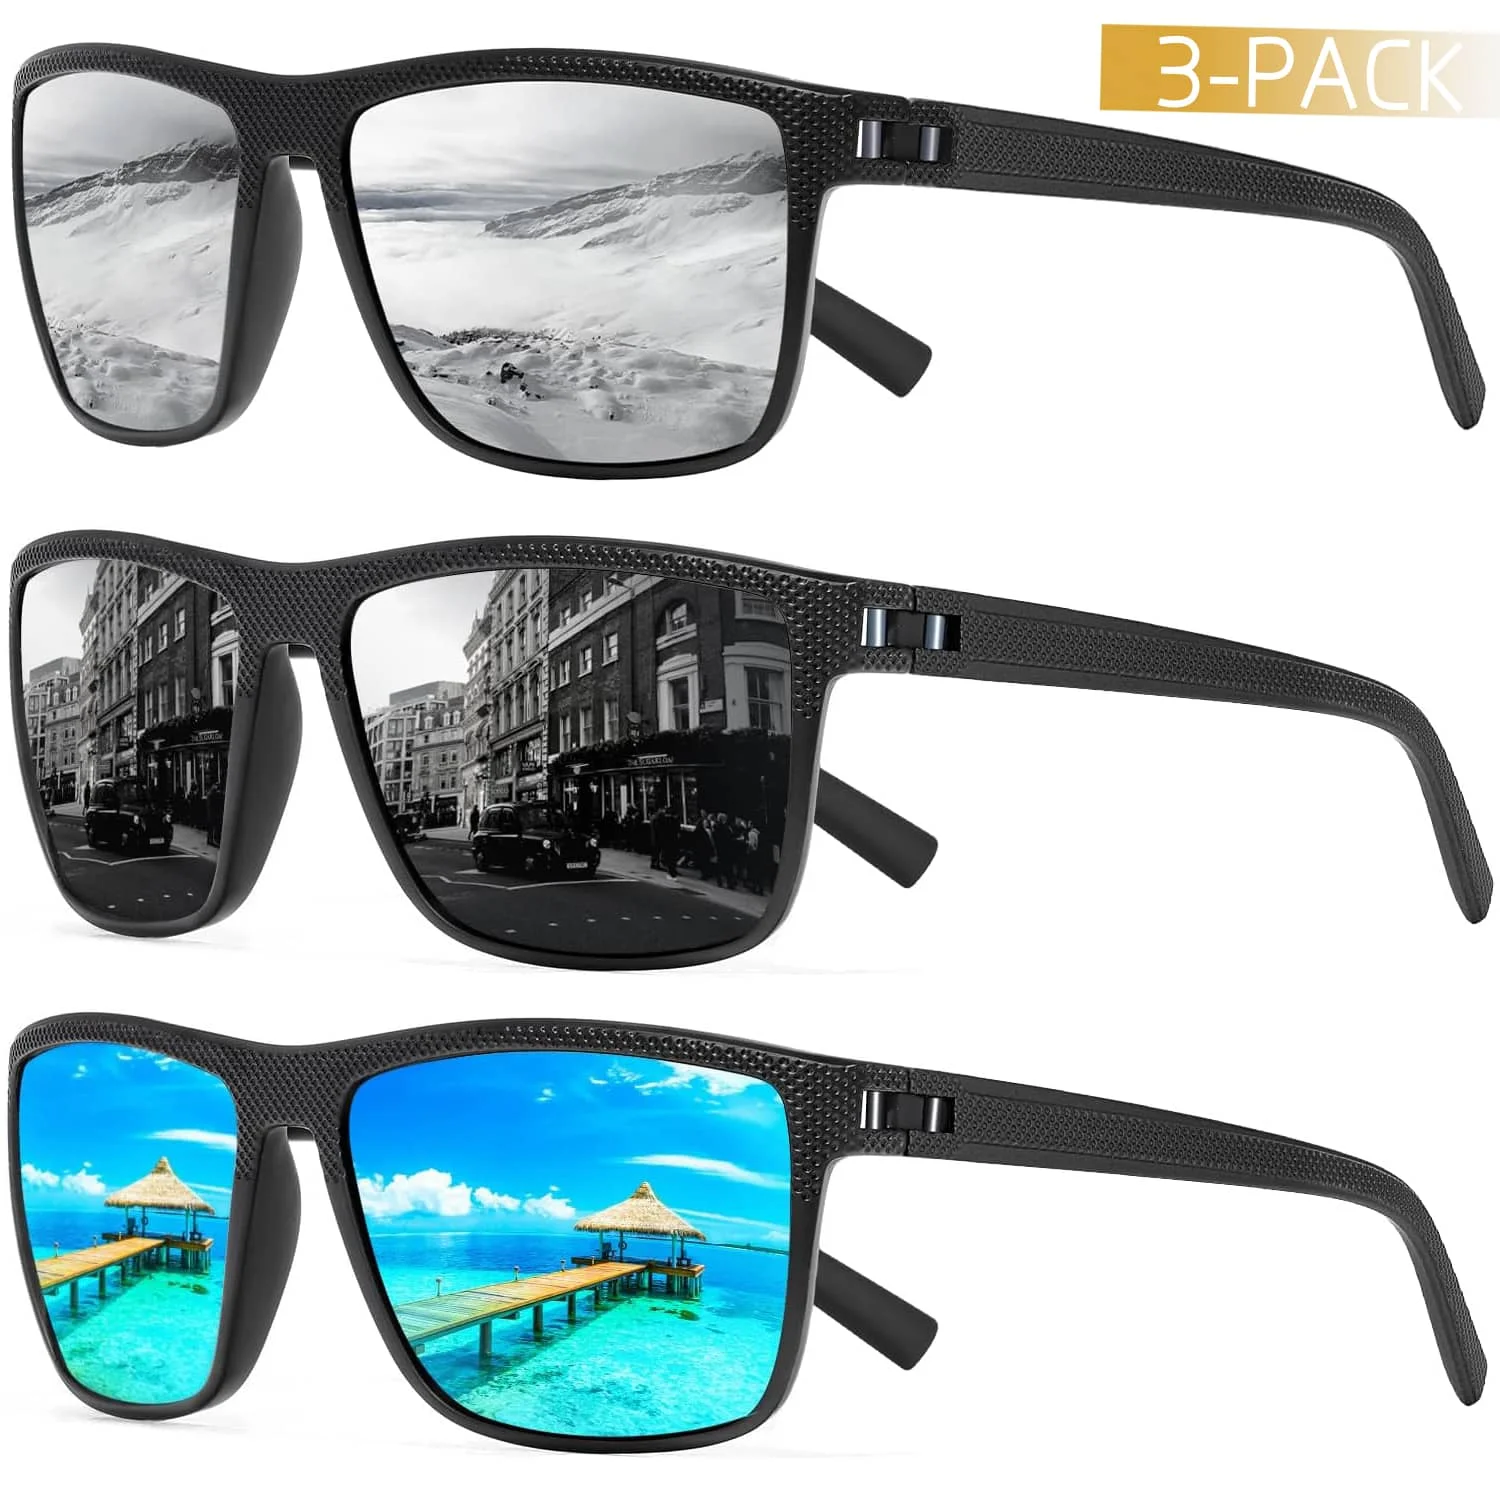 

CRIXALIS 3PCS Square Polarized Sunglasses for Men Outdoor Fishing Sun Glasses Male Anti-glare Fashion Mirror Shades Female UV400